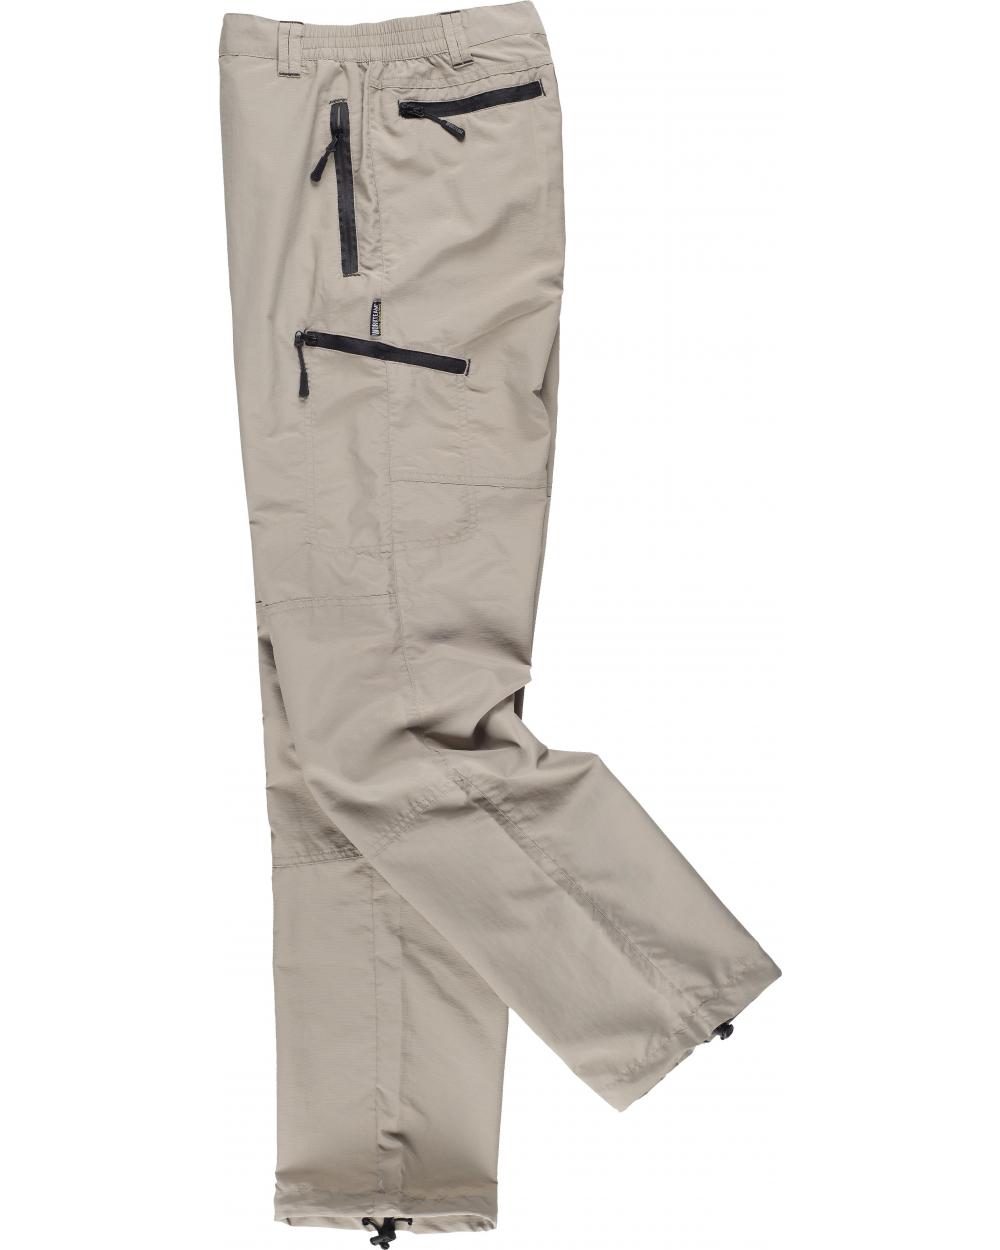 Comprar Pantalon de nylon fresh S9860 Beige workteam barato